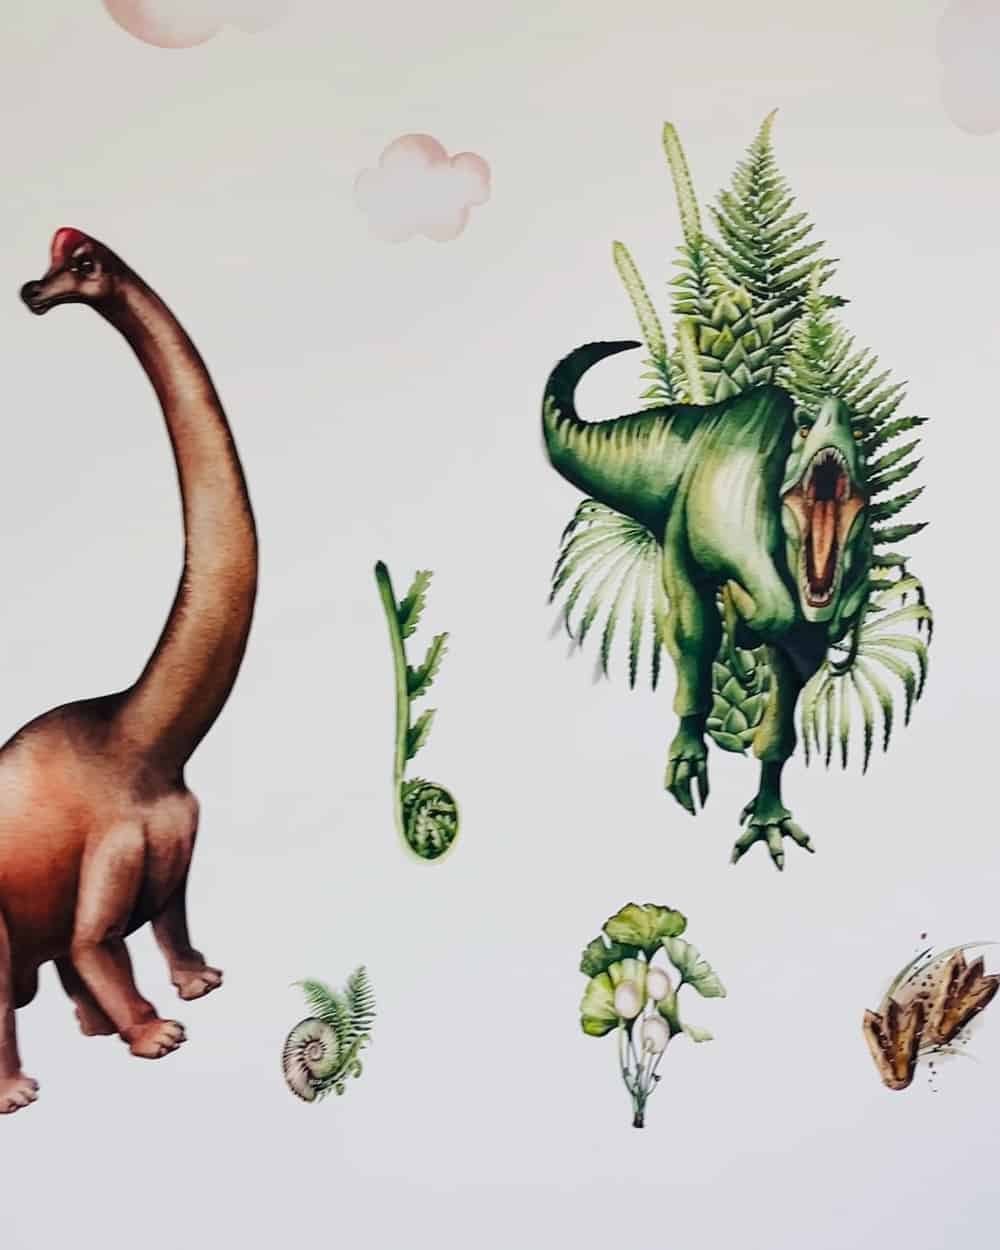 Best Dinosaur Wall Decal for Kids Room - Removable Dinosaur Wallpaper